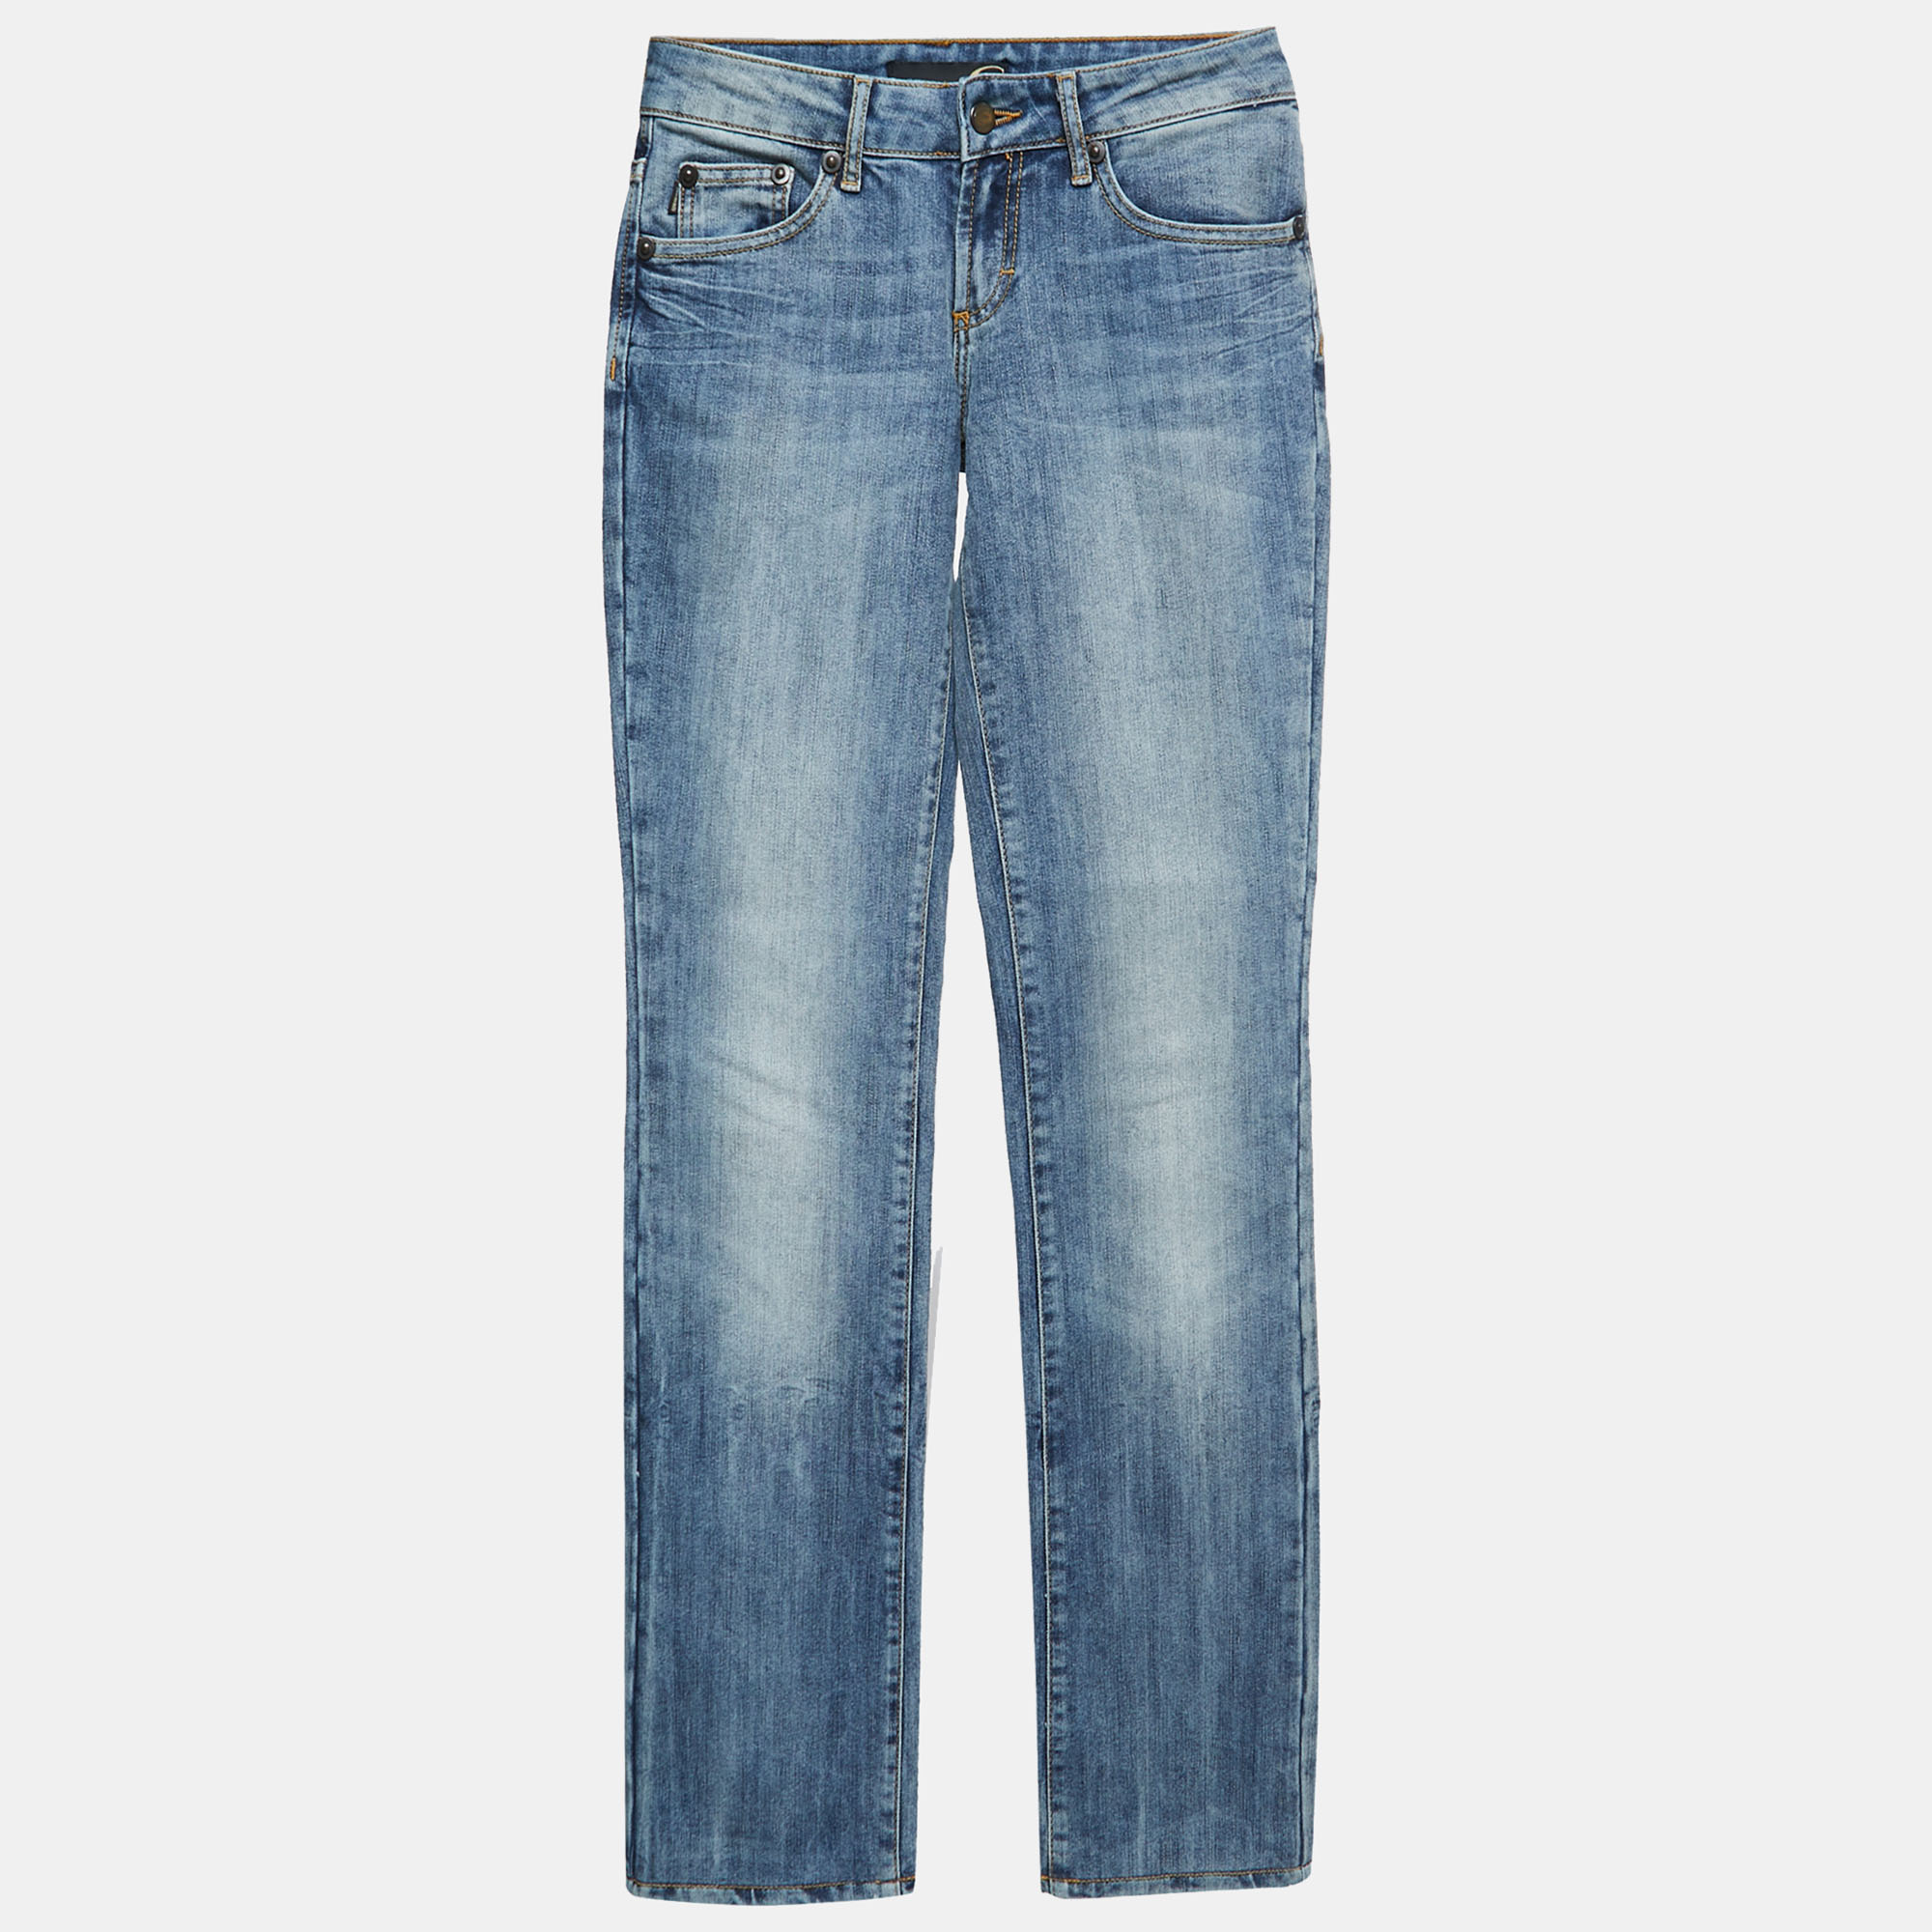 Pre-owned Just Cavalli Light Blue Denim Straight Leg Jeans M Waist 28"